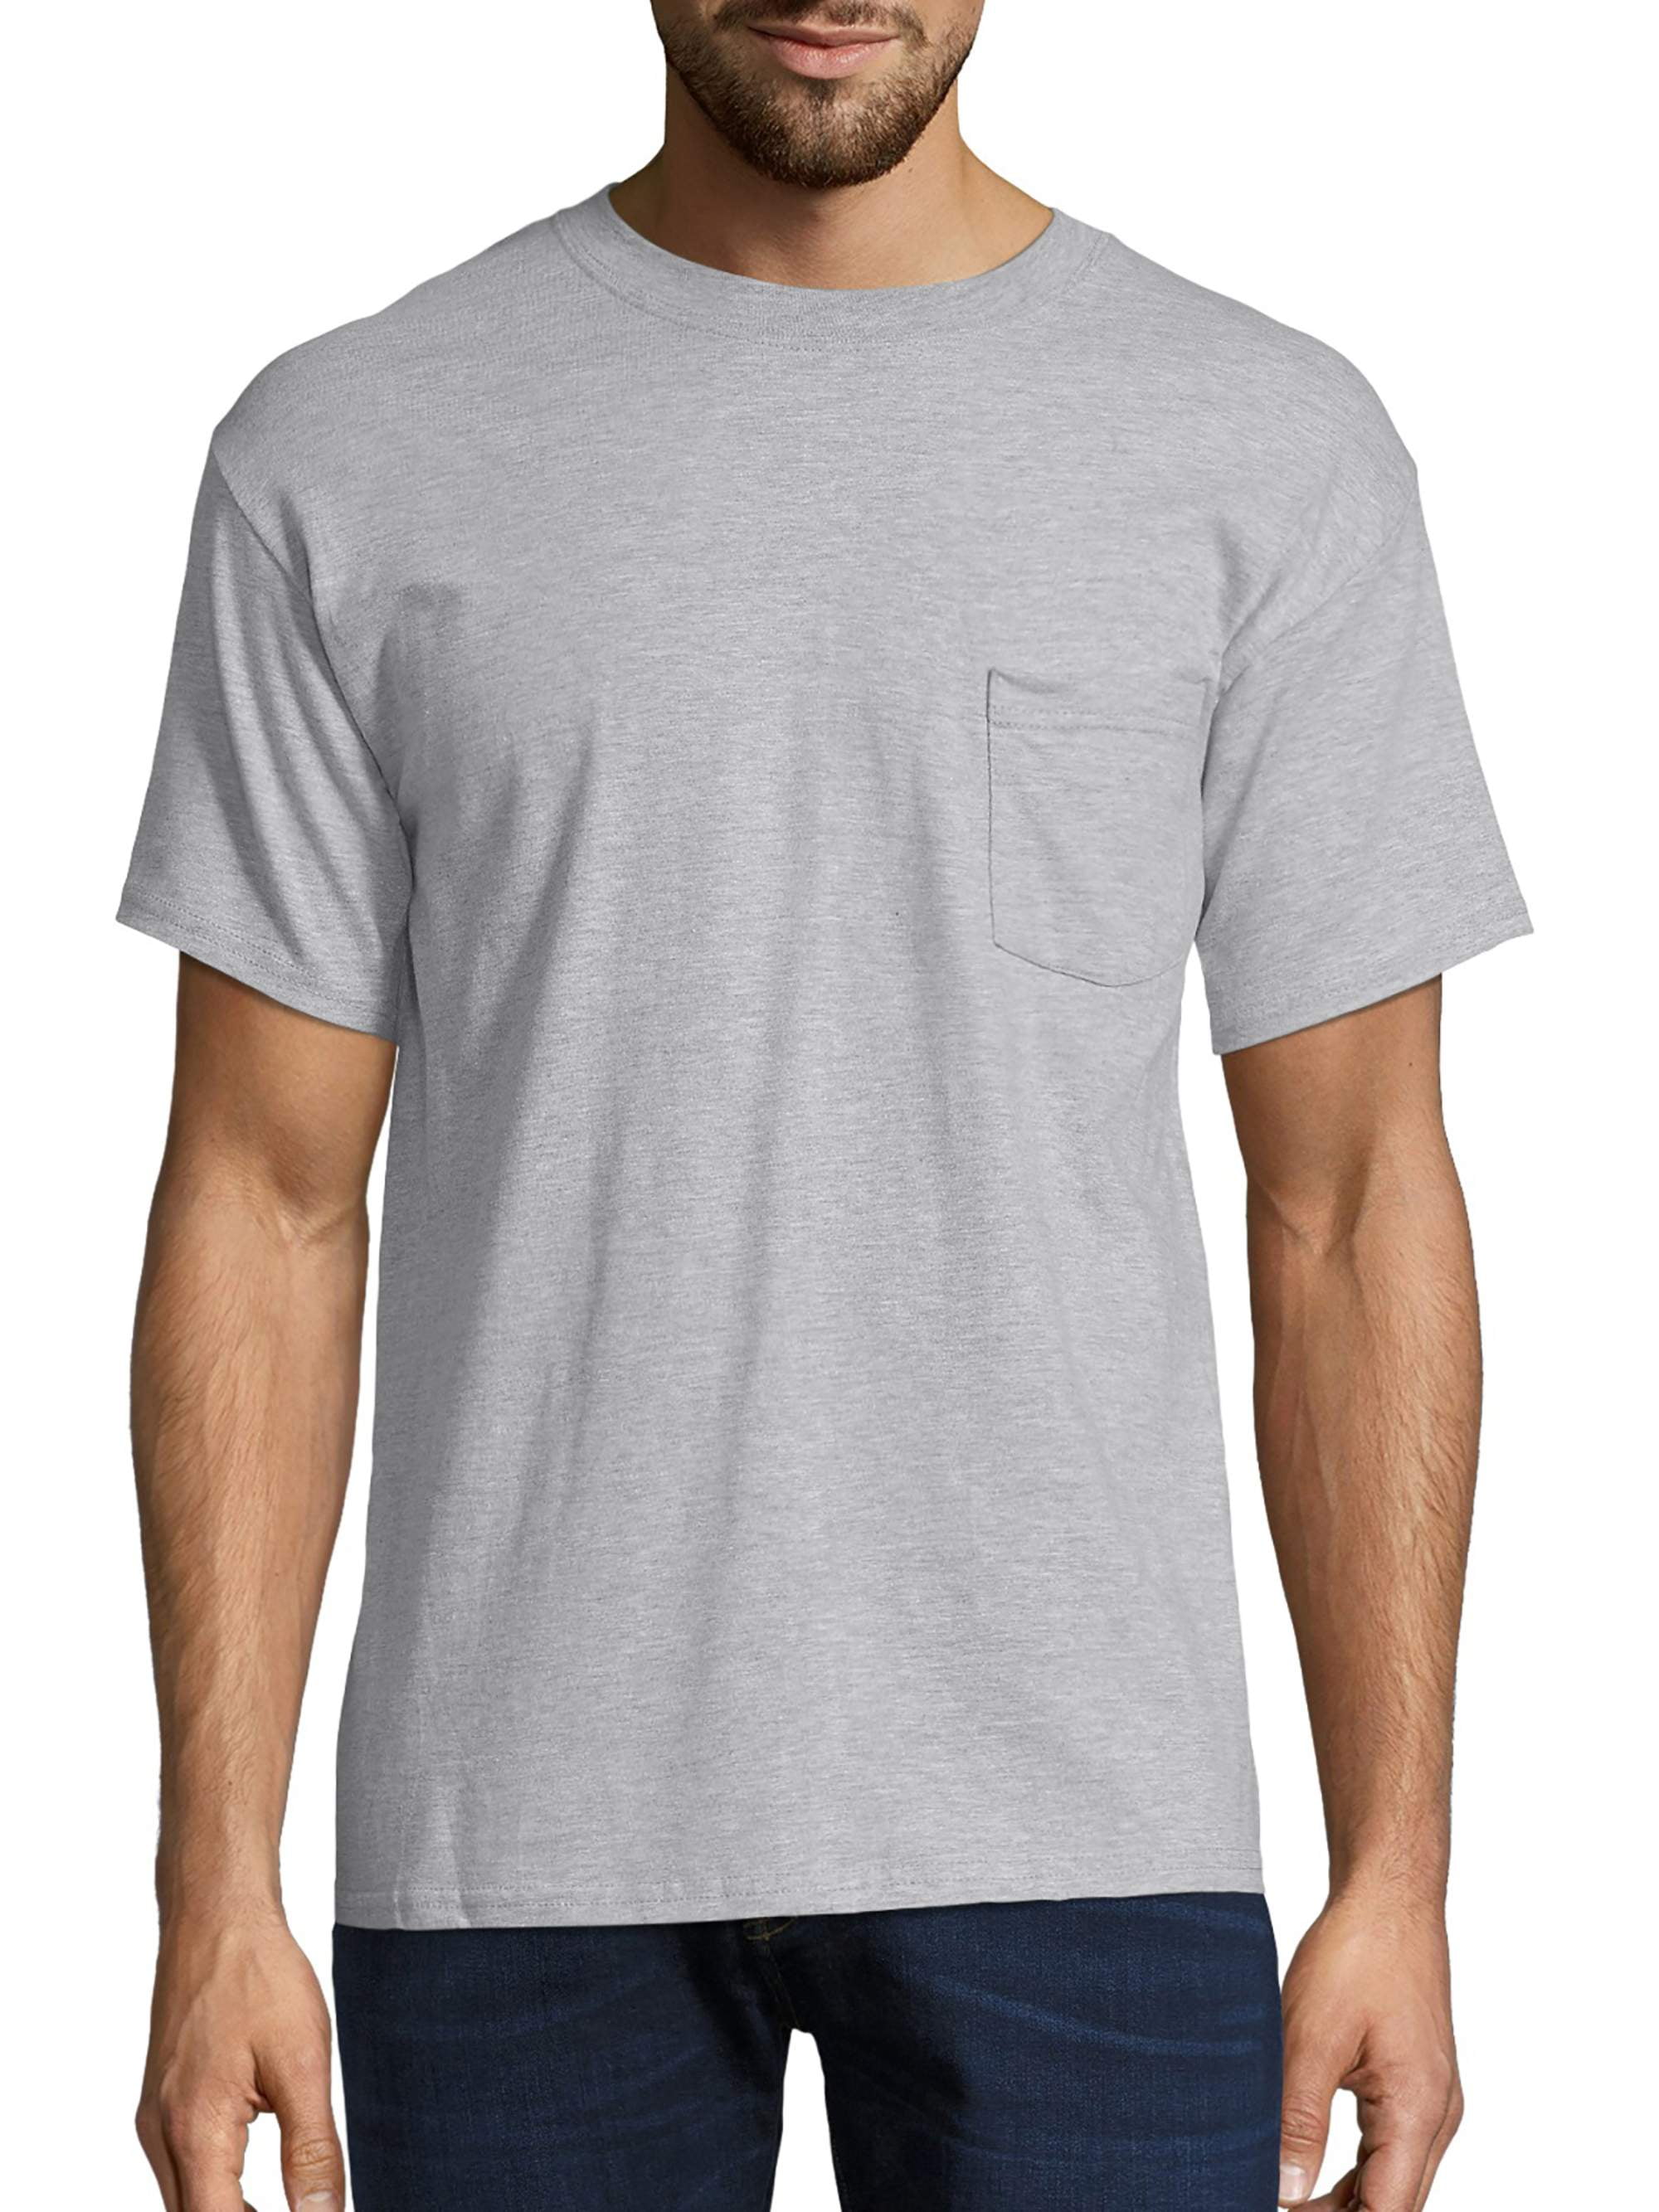 Men/'s T-Shirt Crop Top Short Sleeve Basic Sports Shirt Tee tshirt New Tee XXL